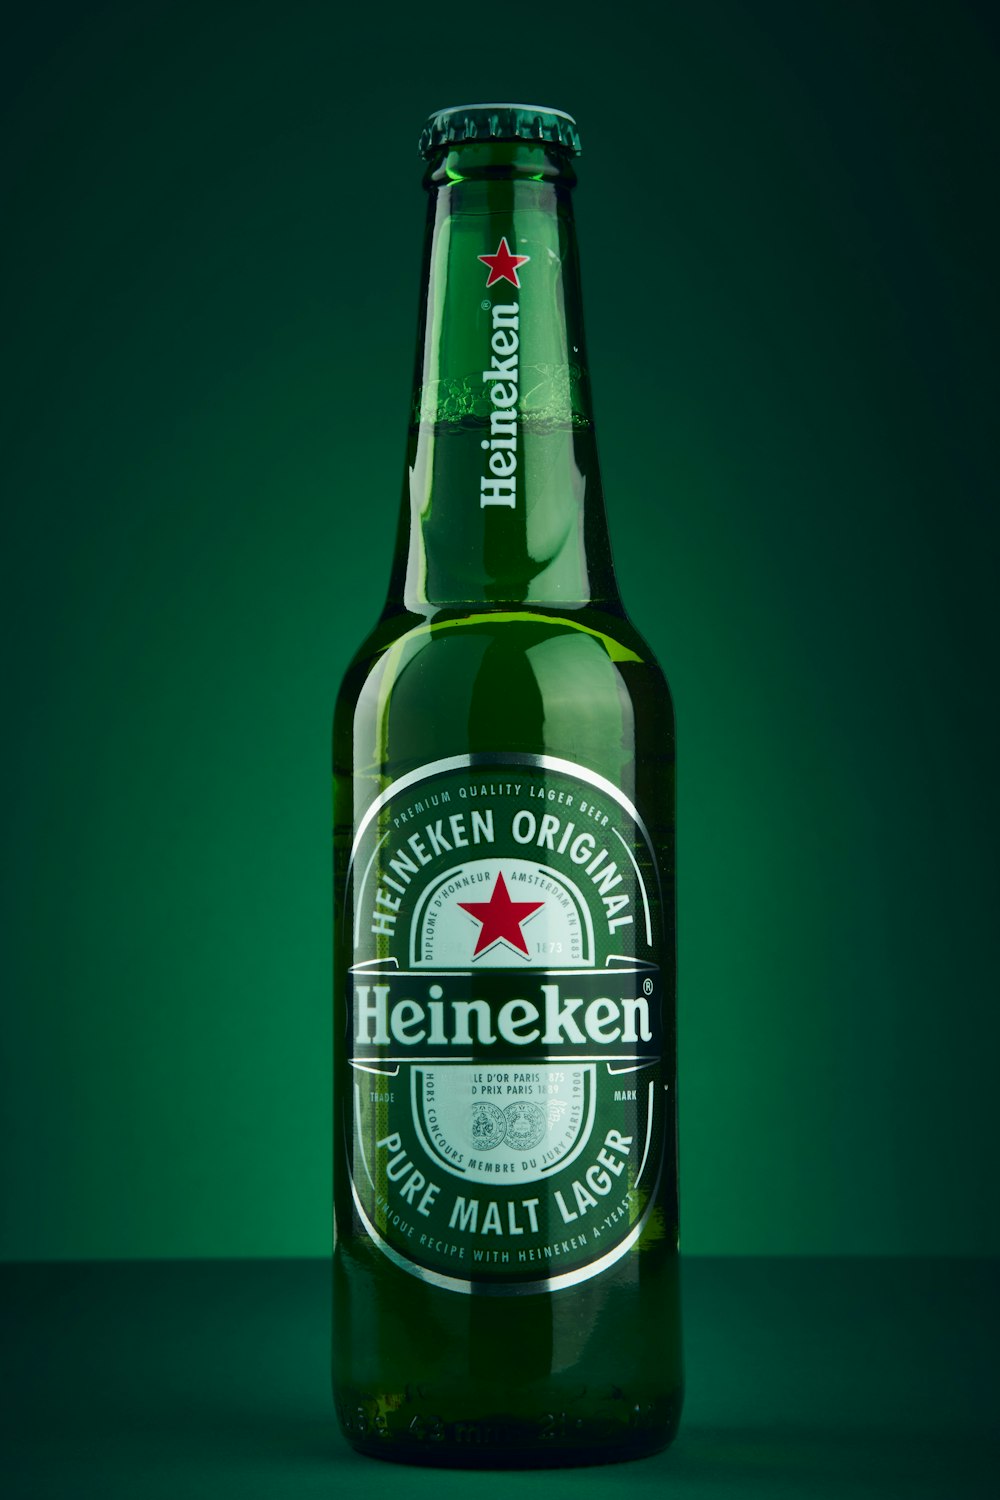 heineken beer bottle on green surface